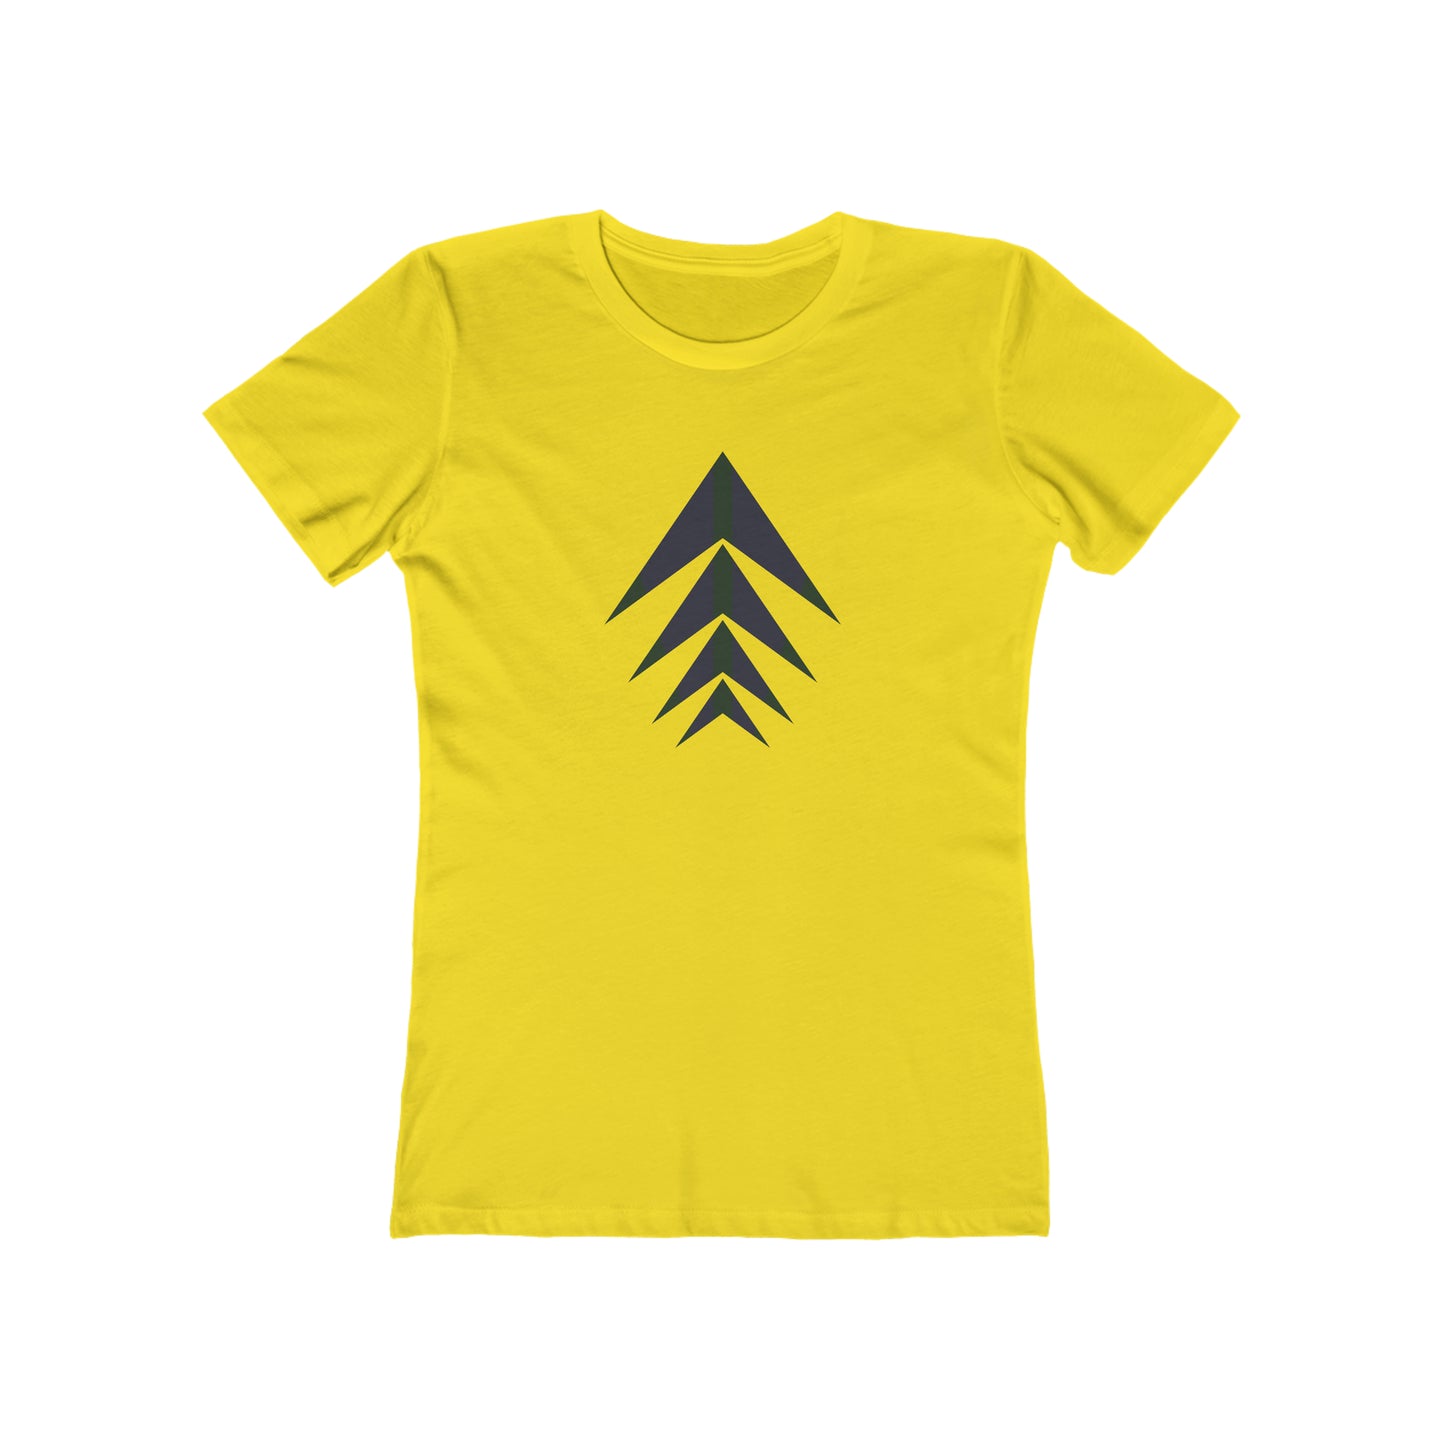 Arrows - Original Graphic Women's T-Shirt